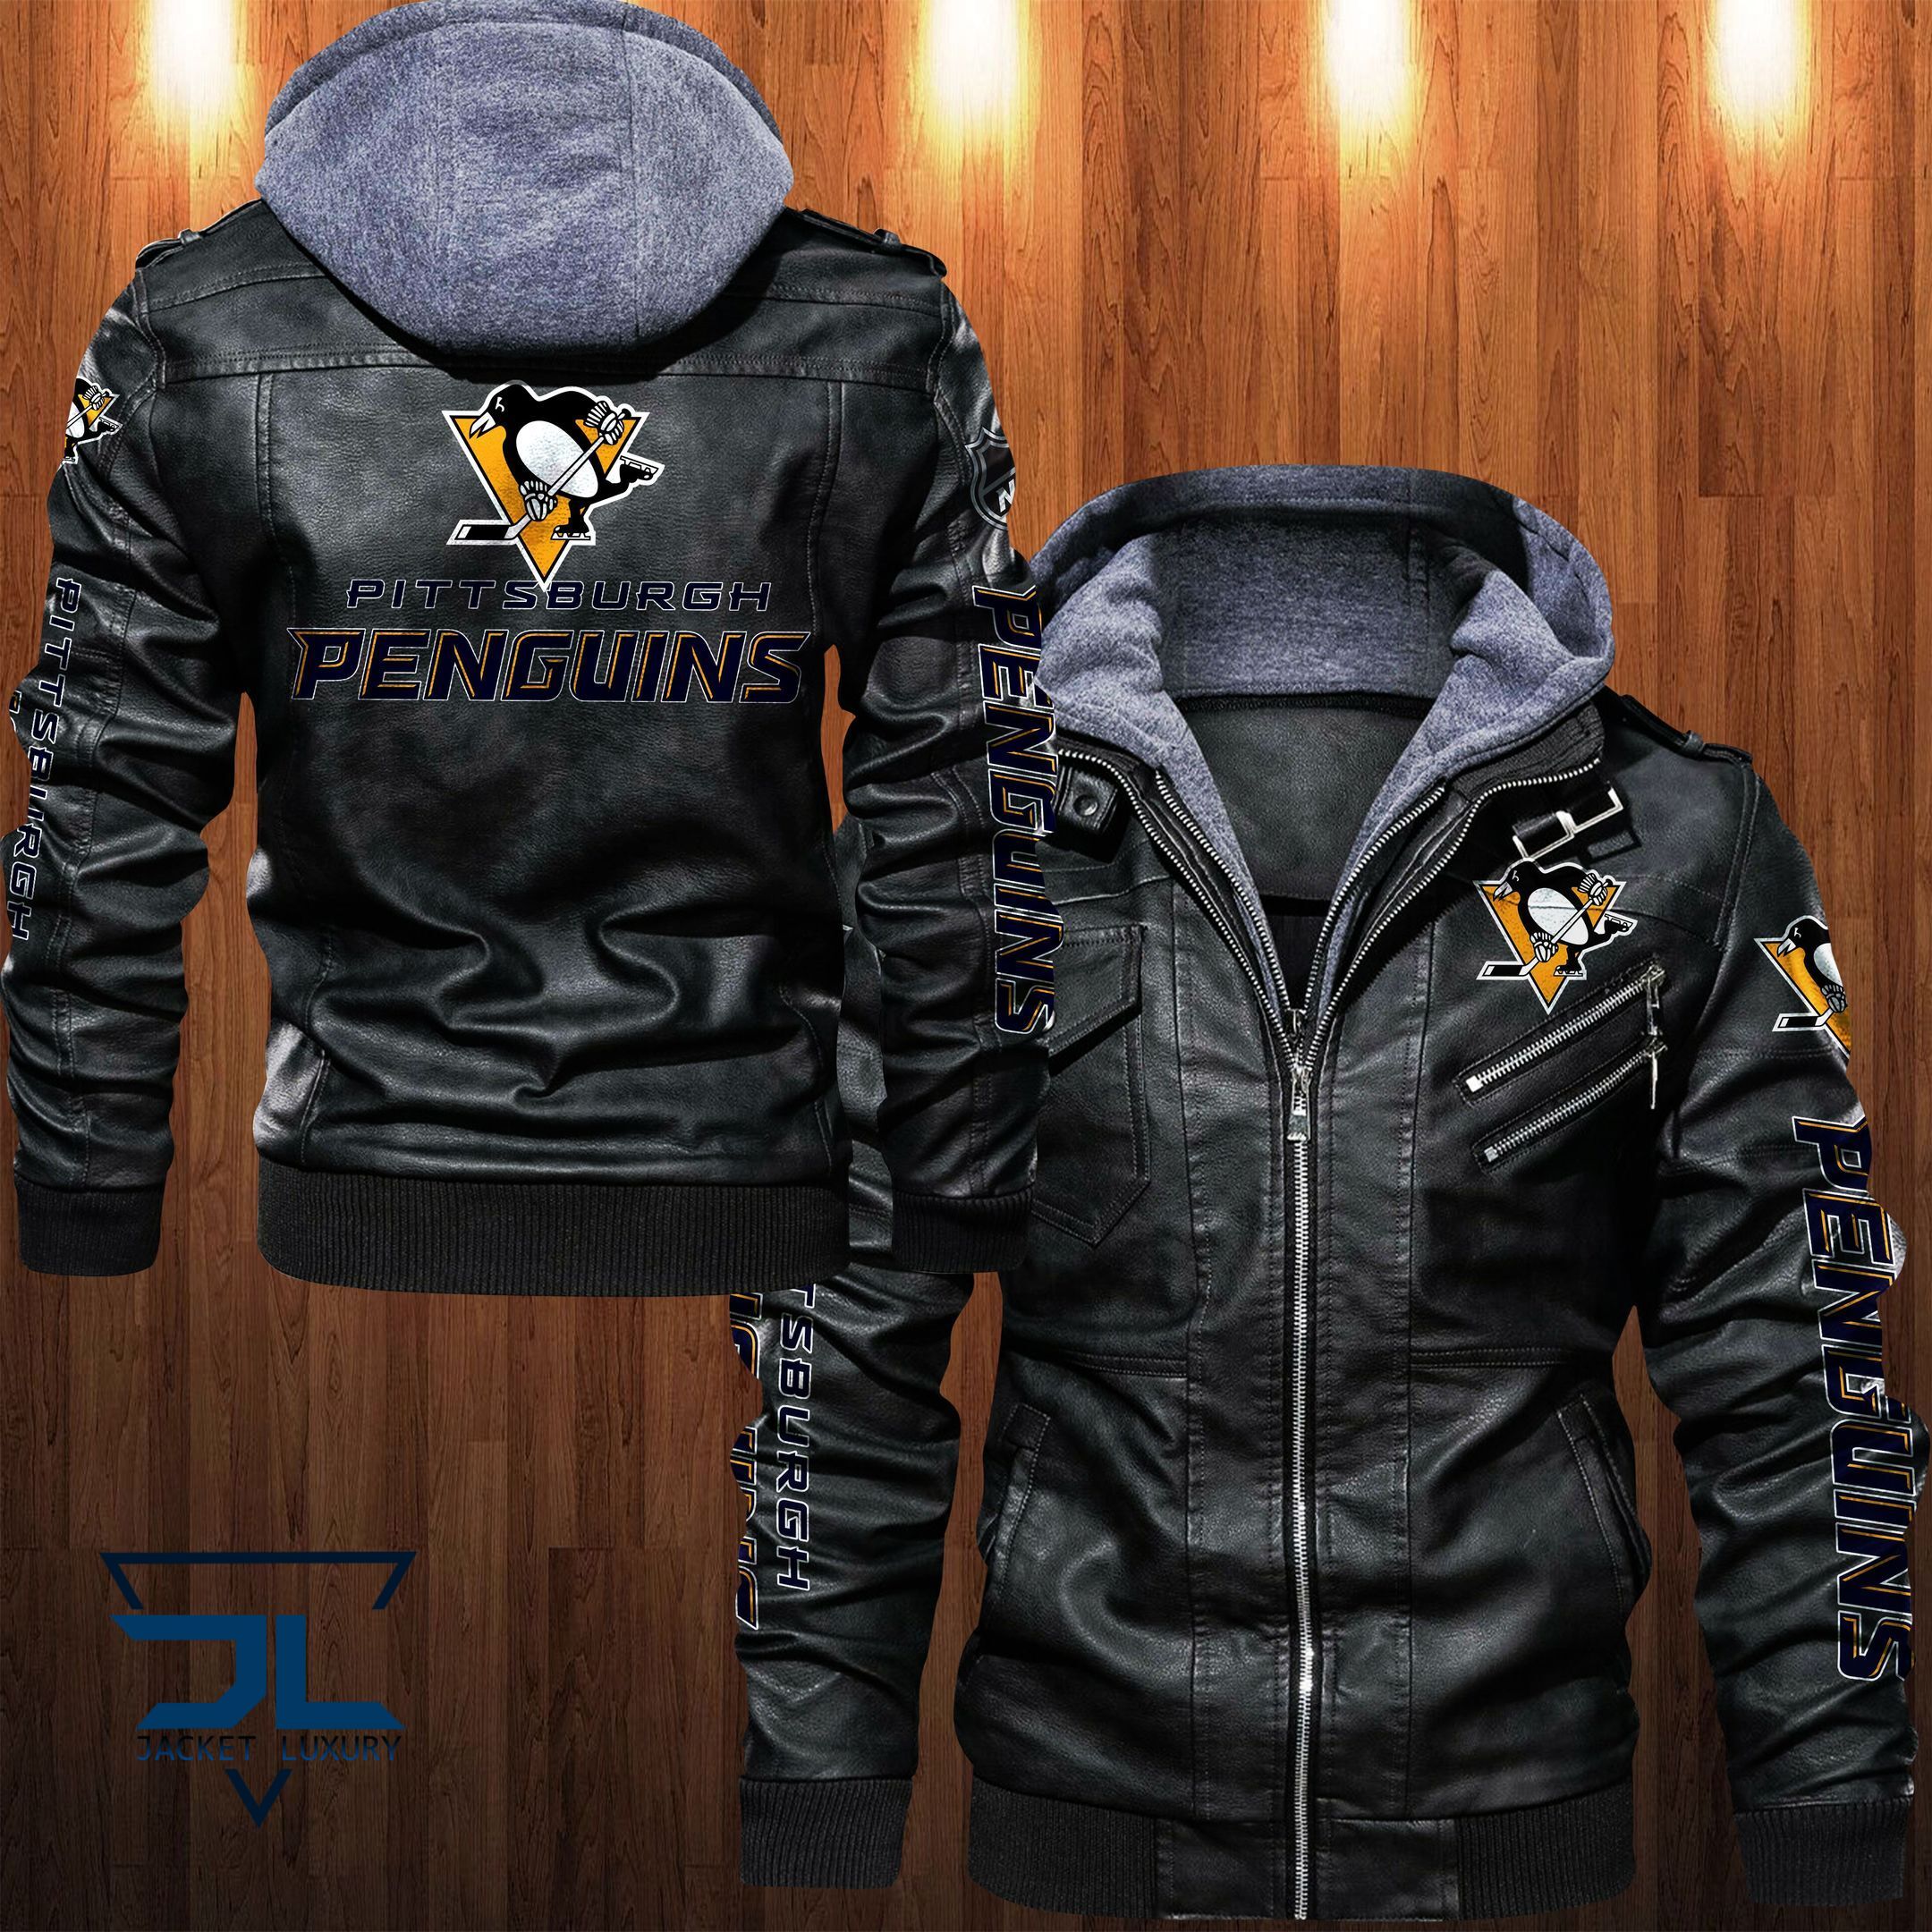 What Leather jacket Sells Best on Techcomshop? 186